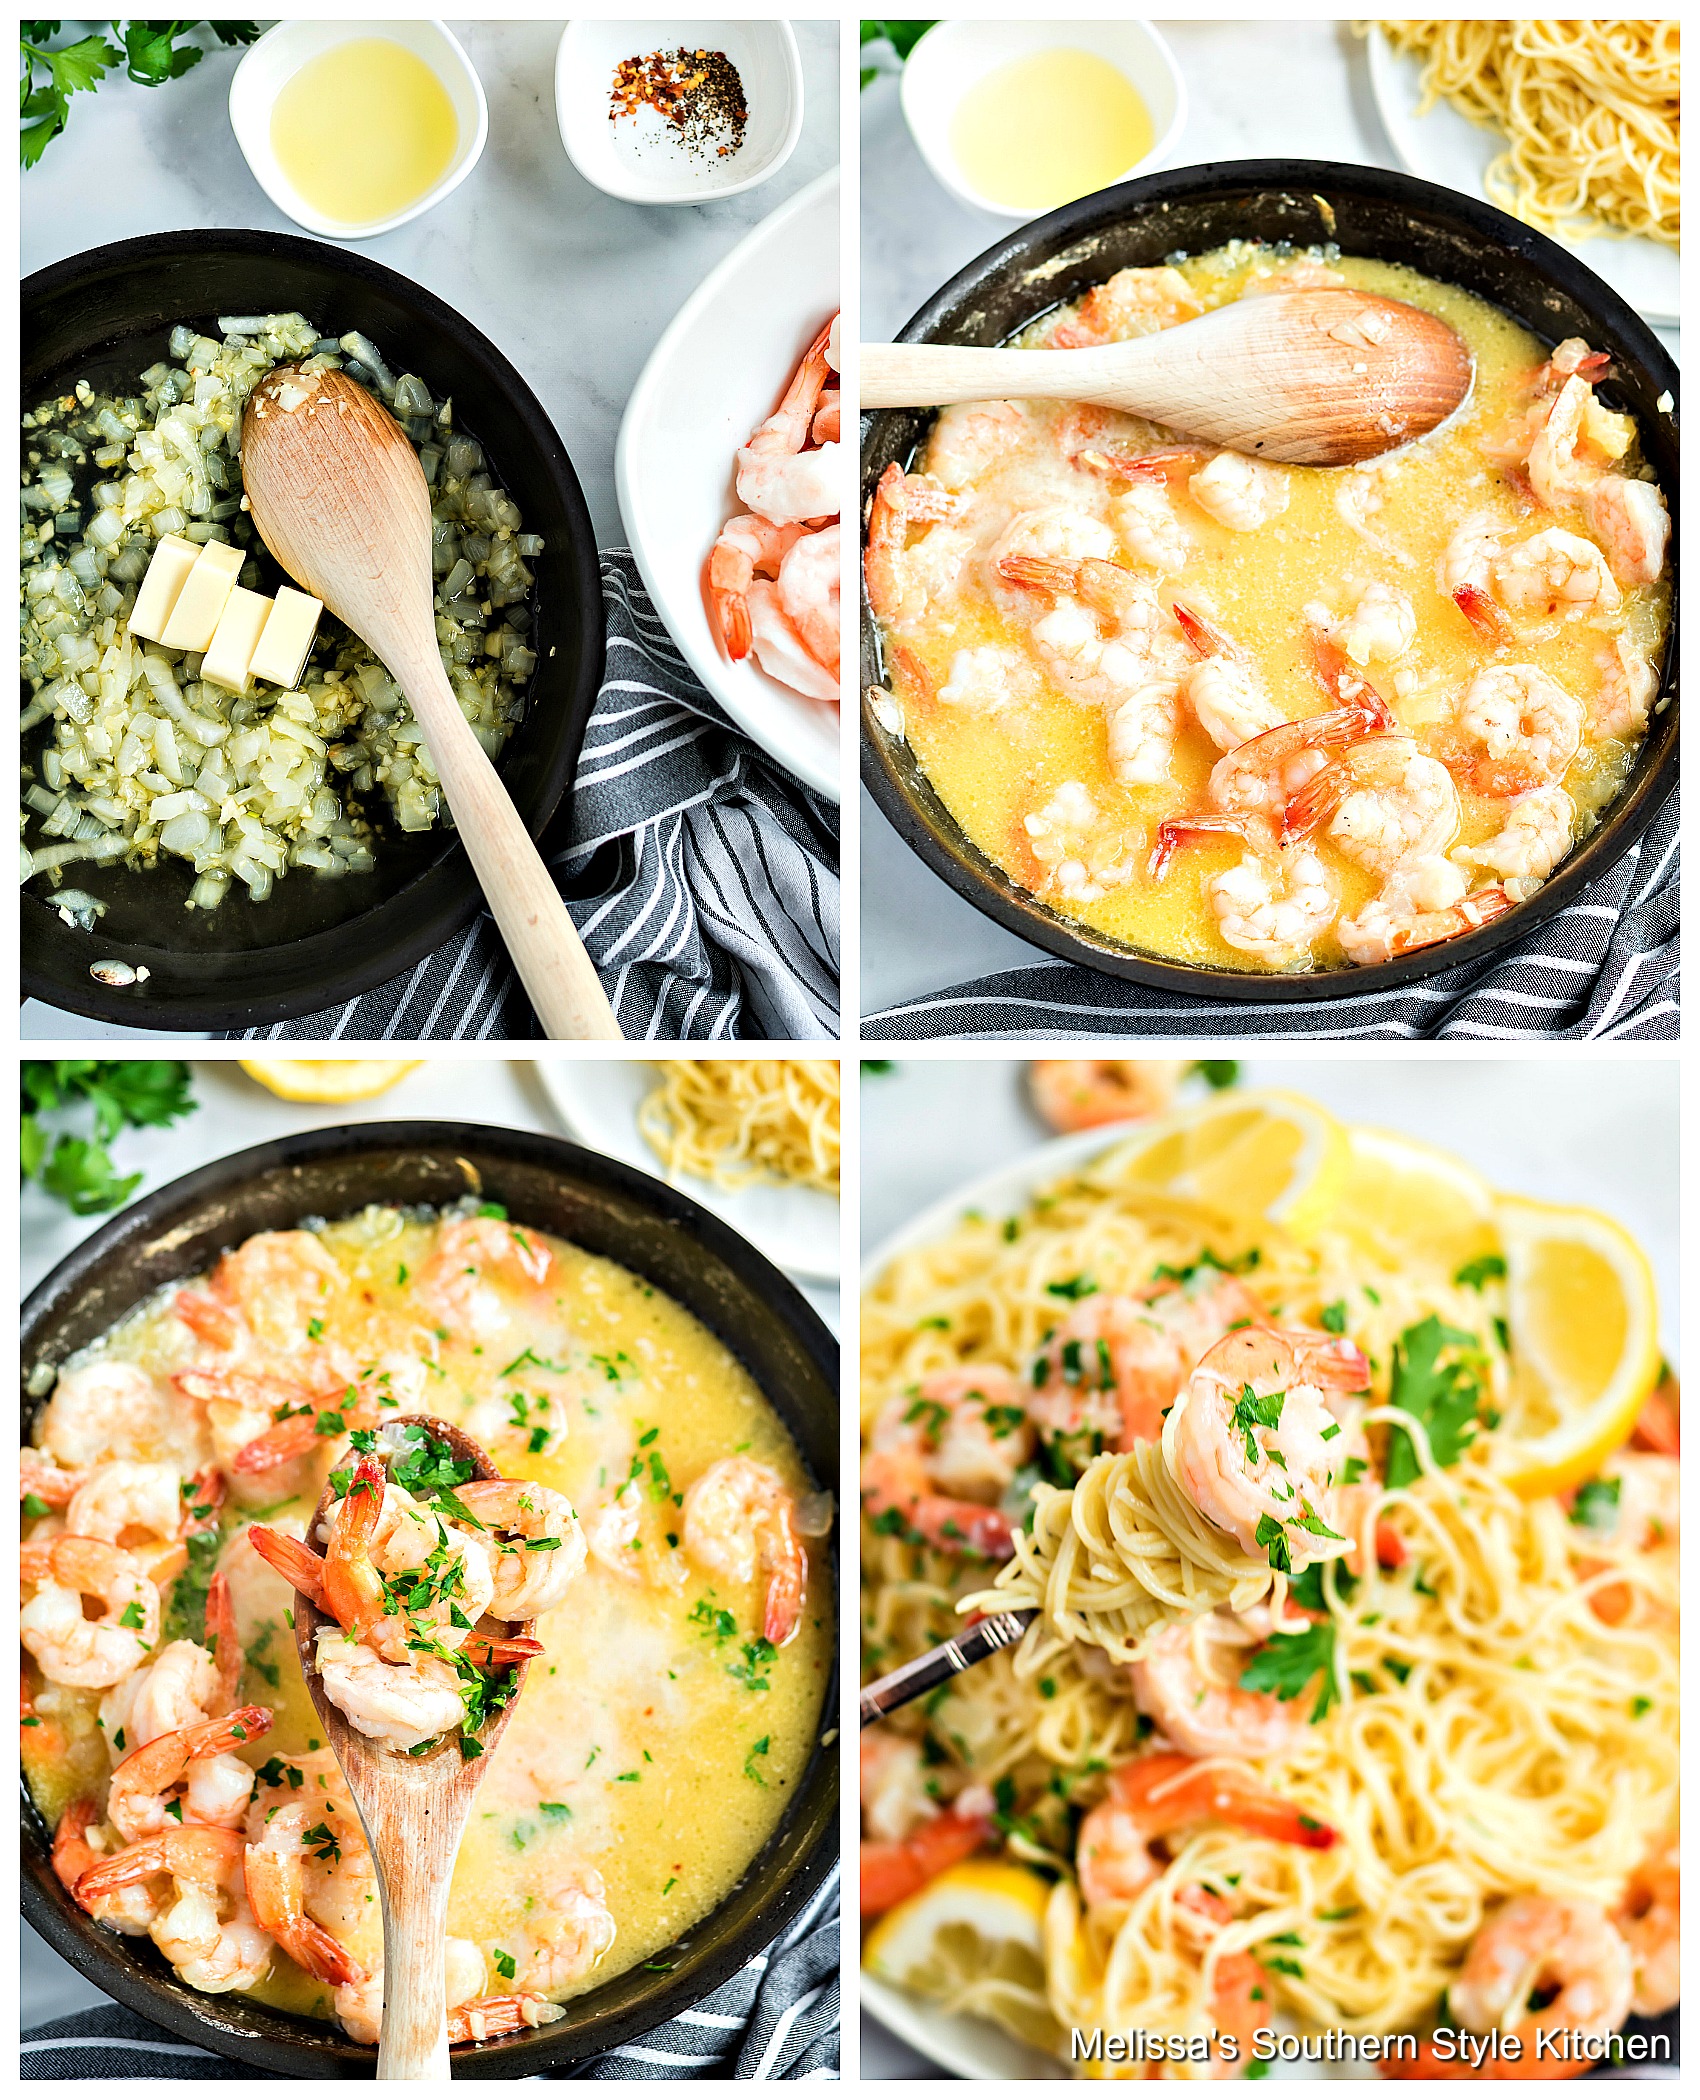 Step-by-step preparation images, shrimp and pasta to make shrimp scampi